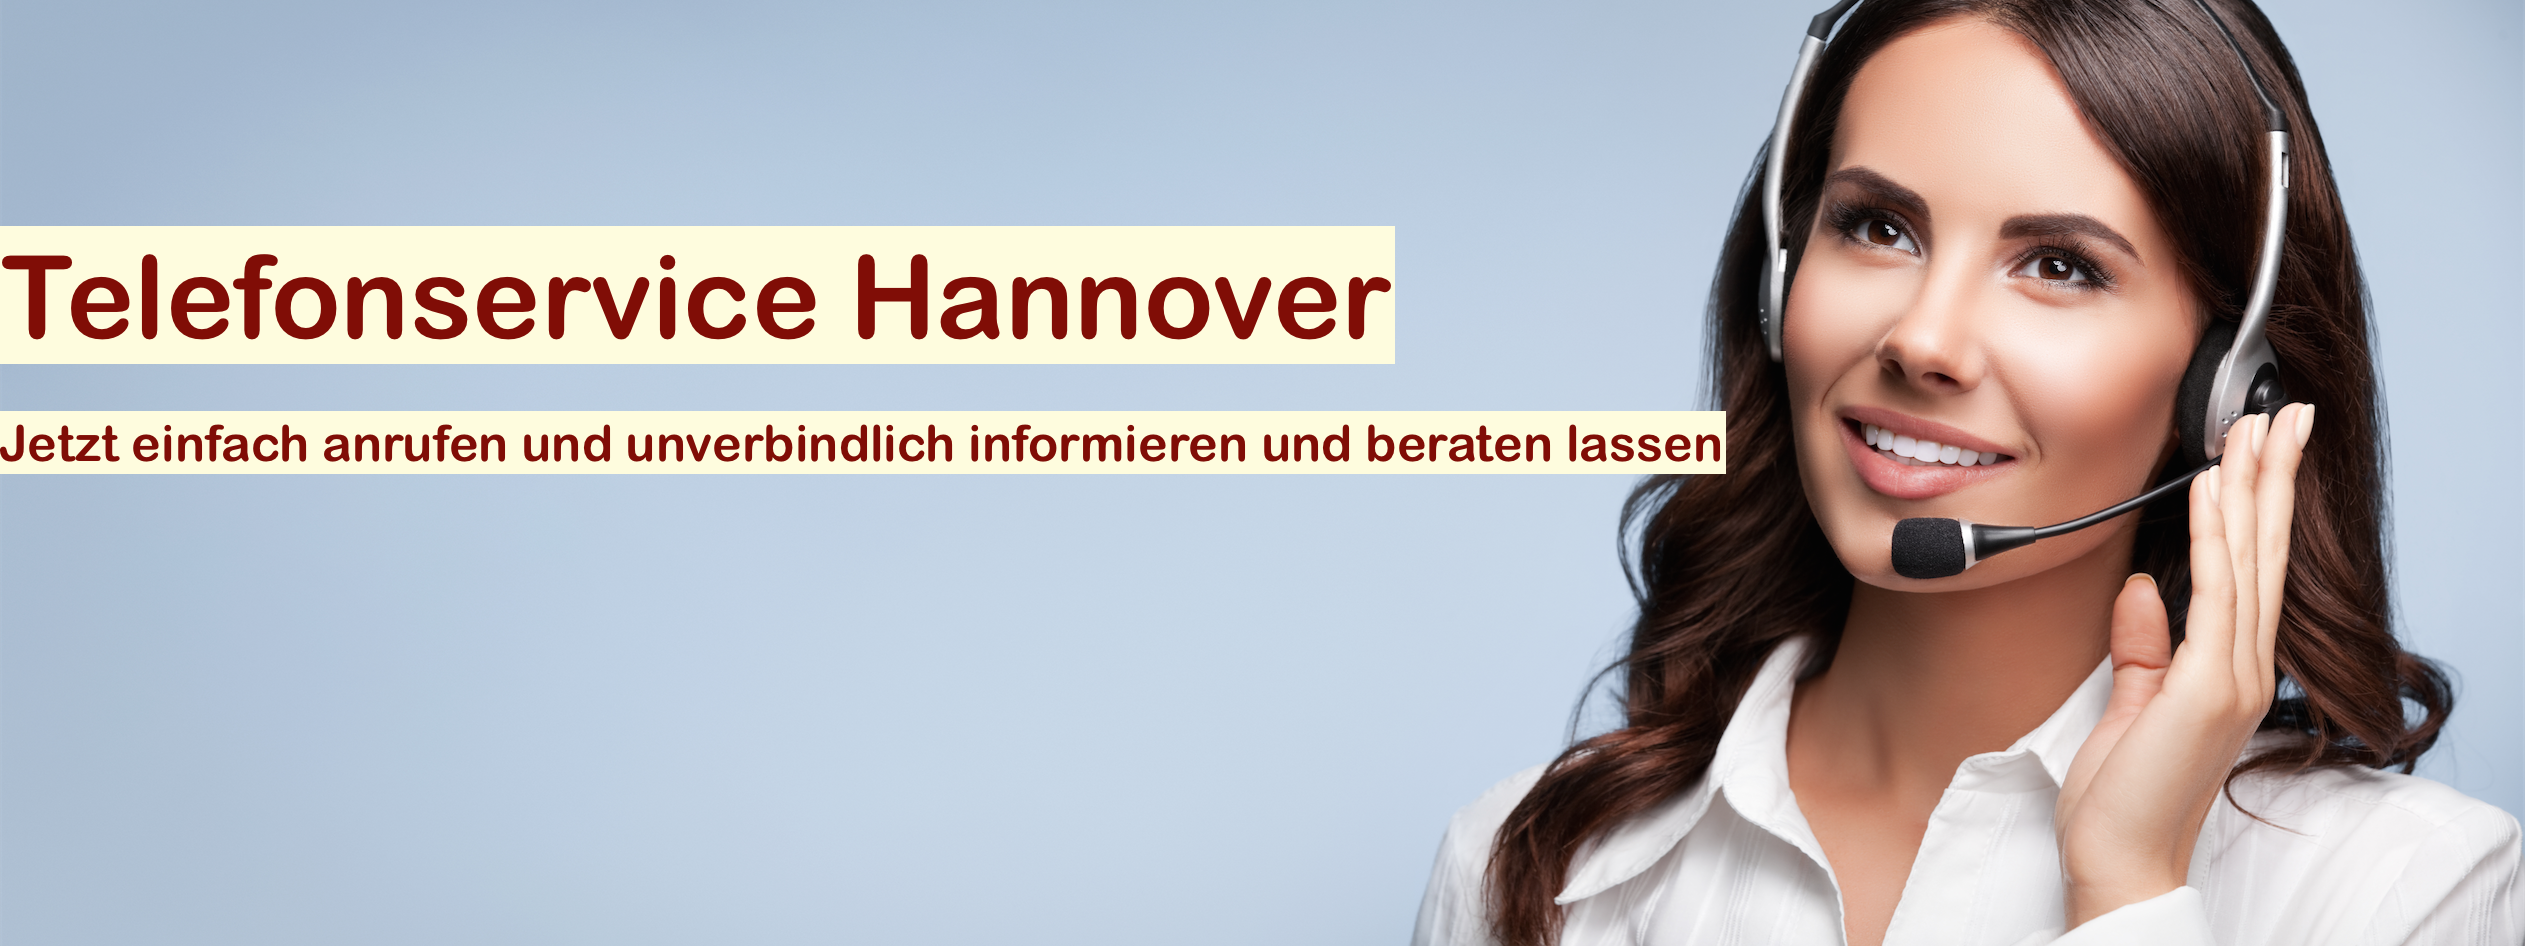 Telefonservice Hannover